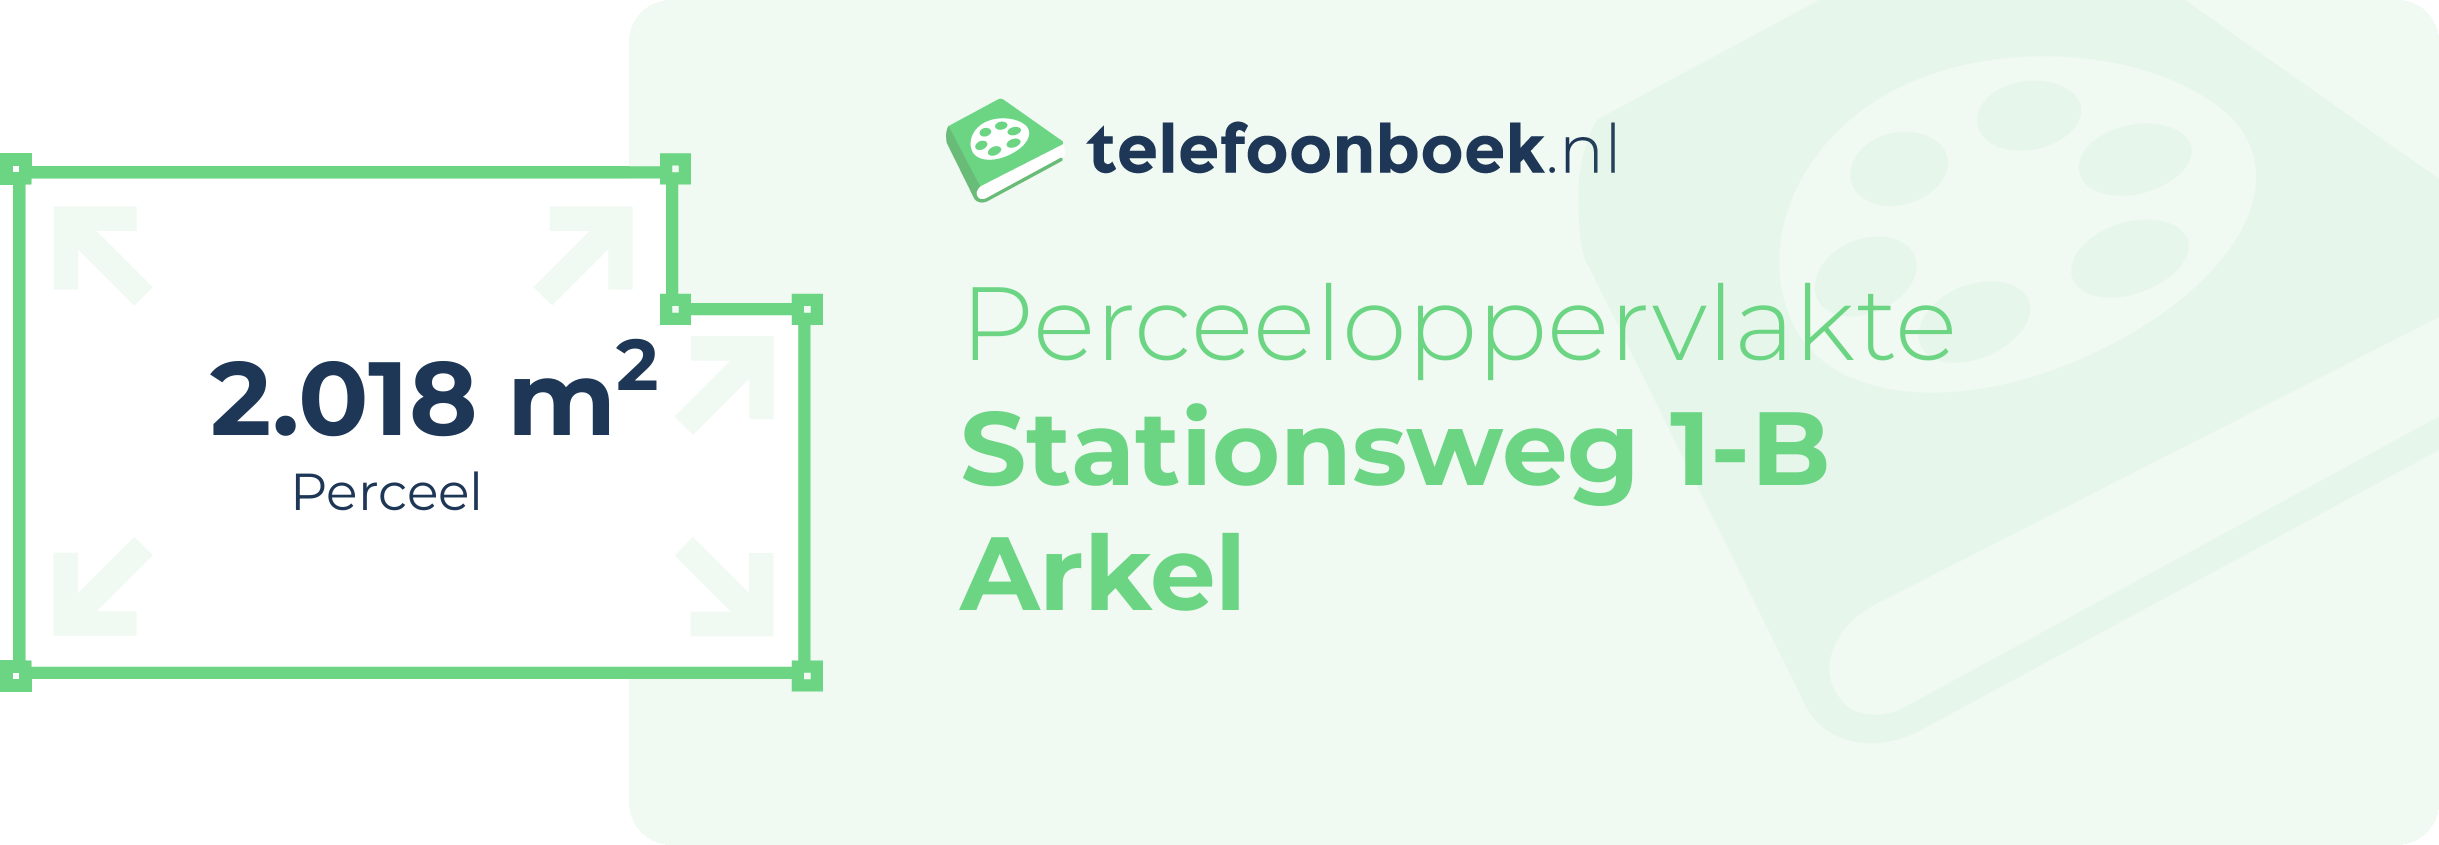 Perceeloppervlakte Stationsweg 1-B Arkel